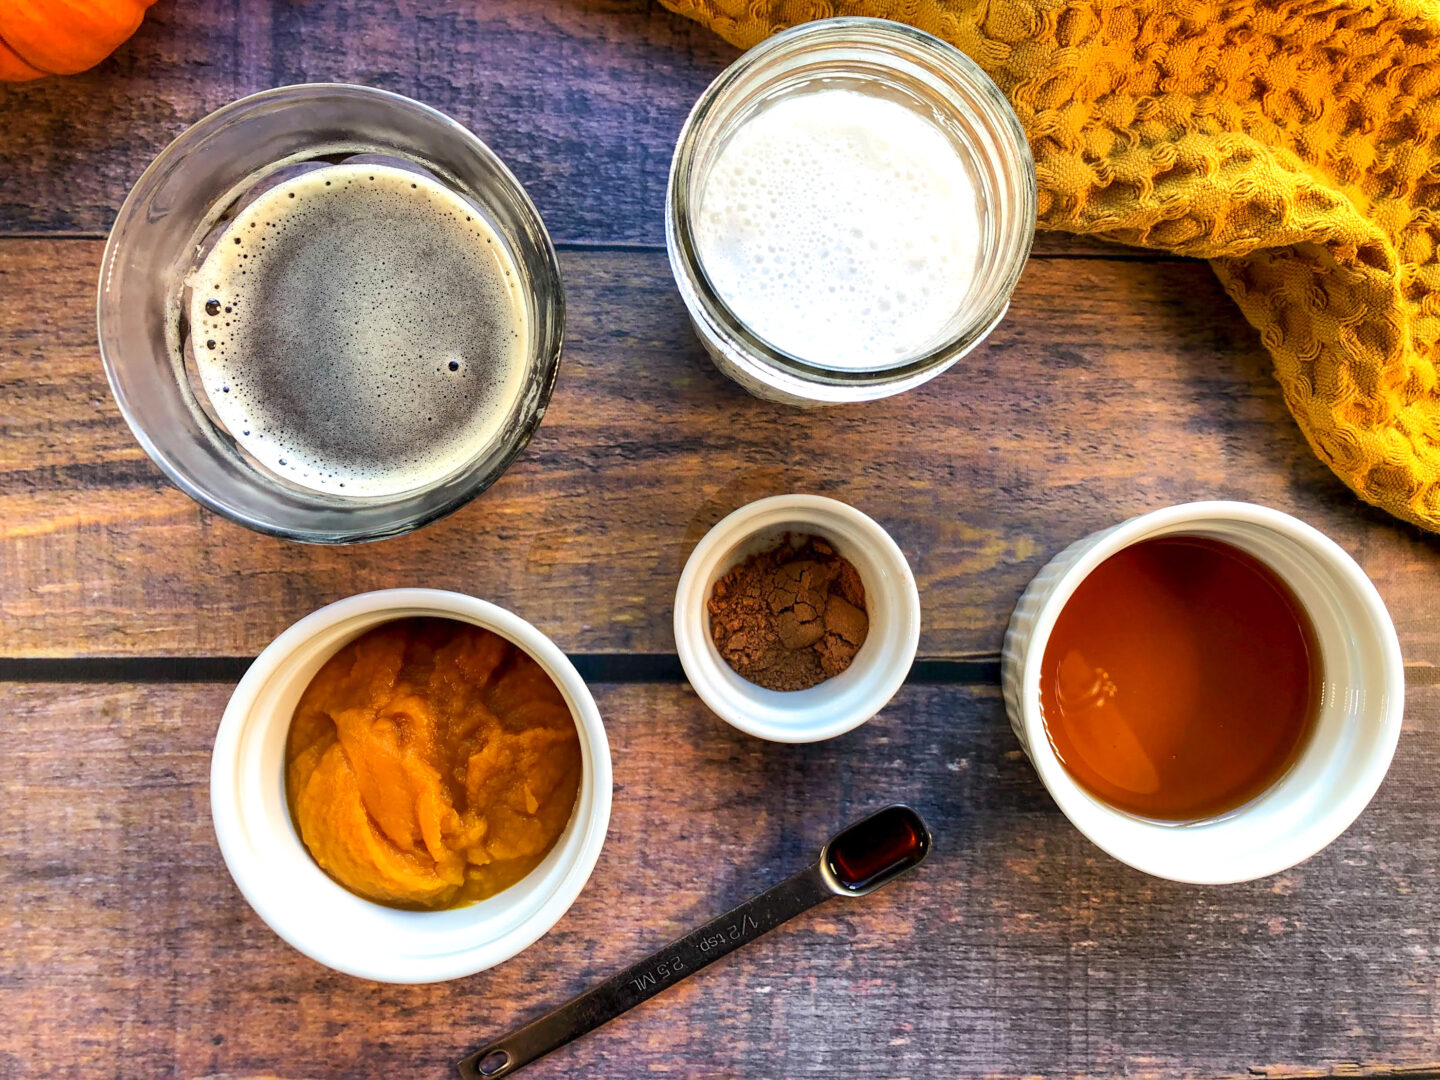 Ingredients for a Pumpkin Spice Latte